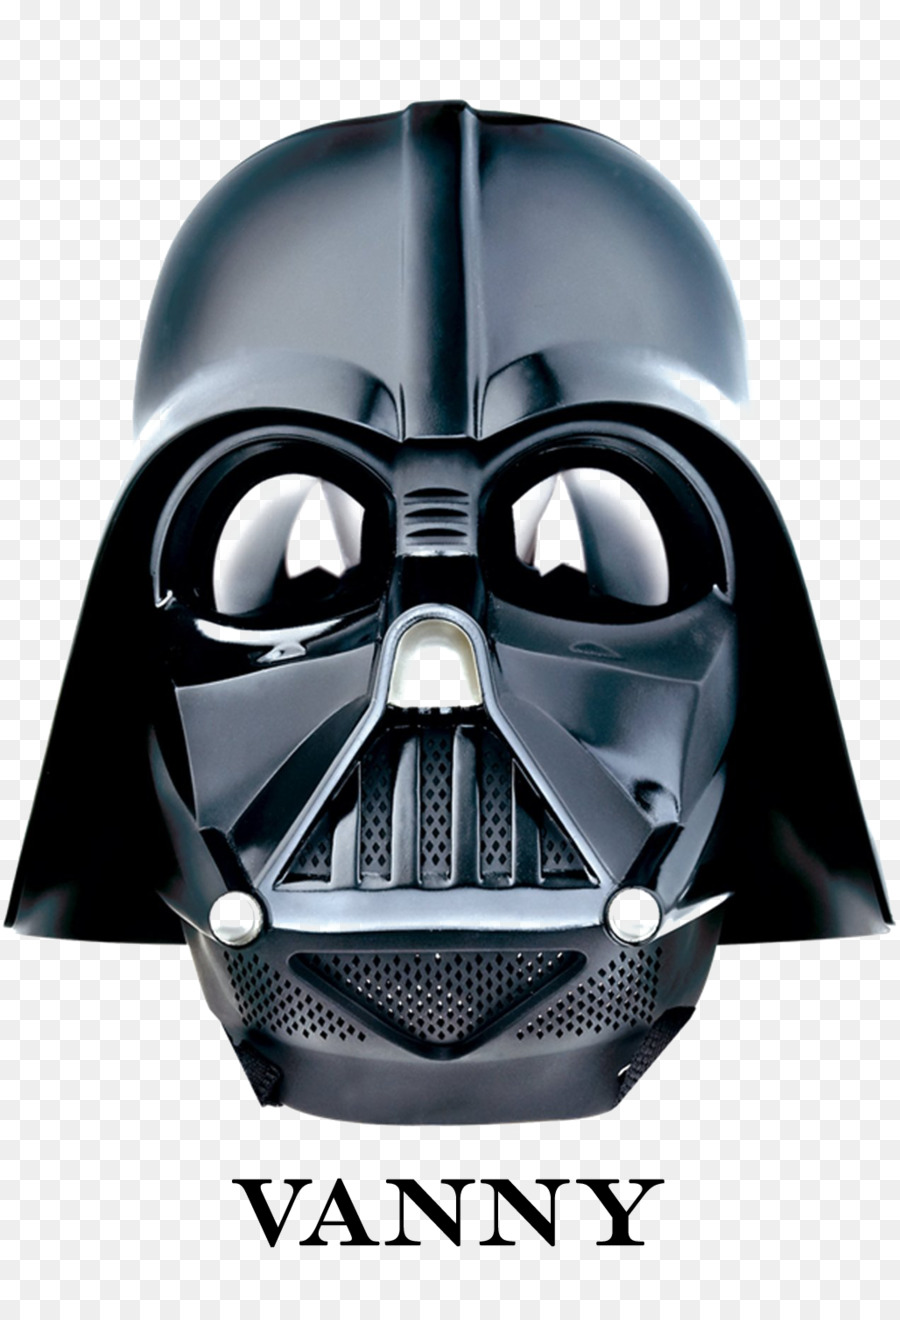 Anakin Skywalker Chewbacca Darth Maul Hasbro Darth Vader Voice Changer Star Wars Day - dart vader png download - 1028*1488 - Free Transparent Anakin Skywalker png Download.